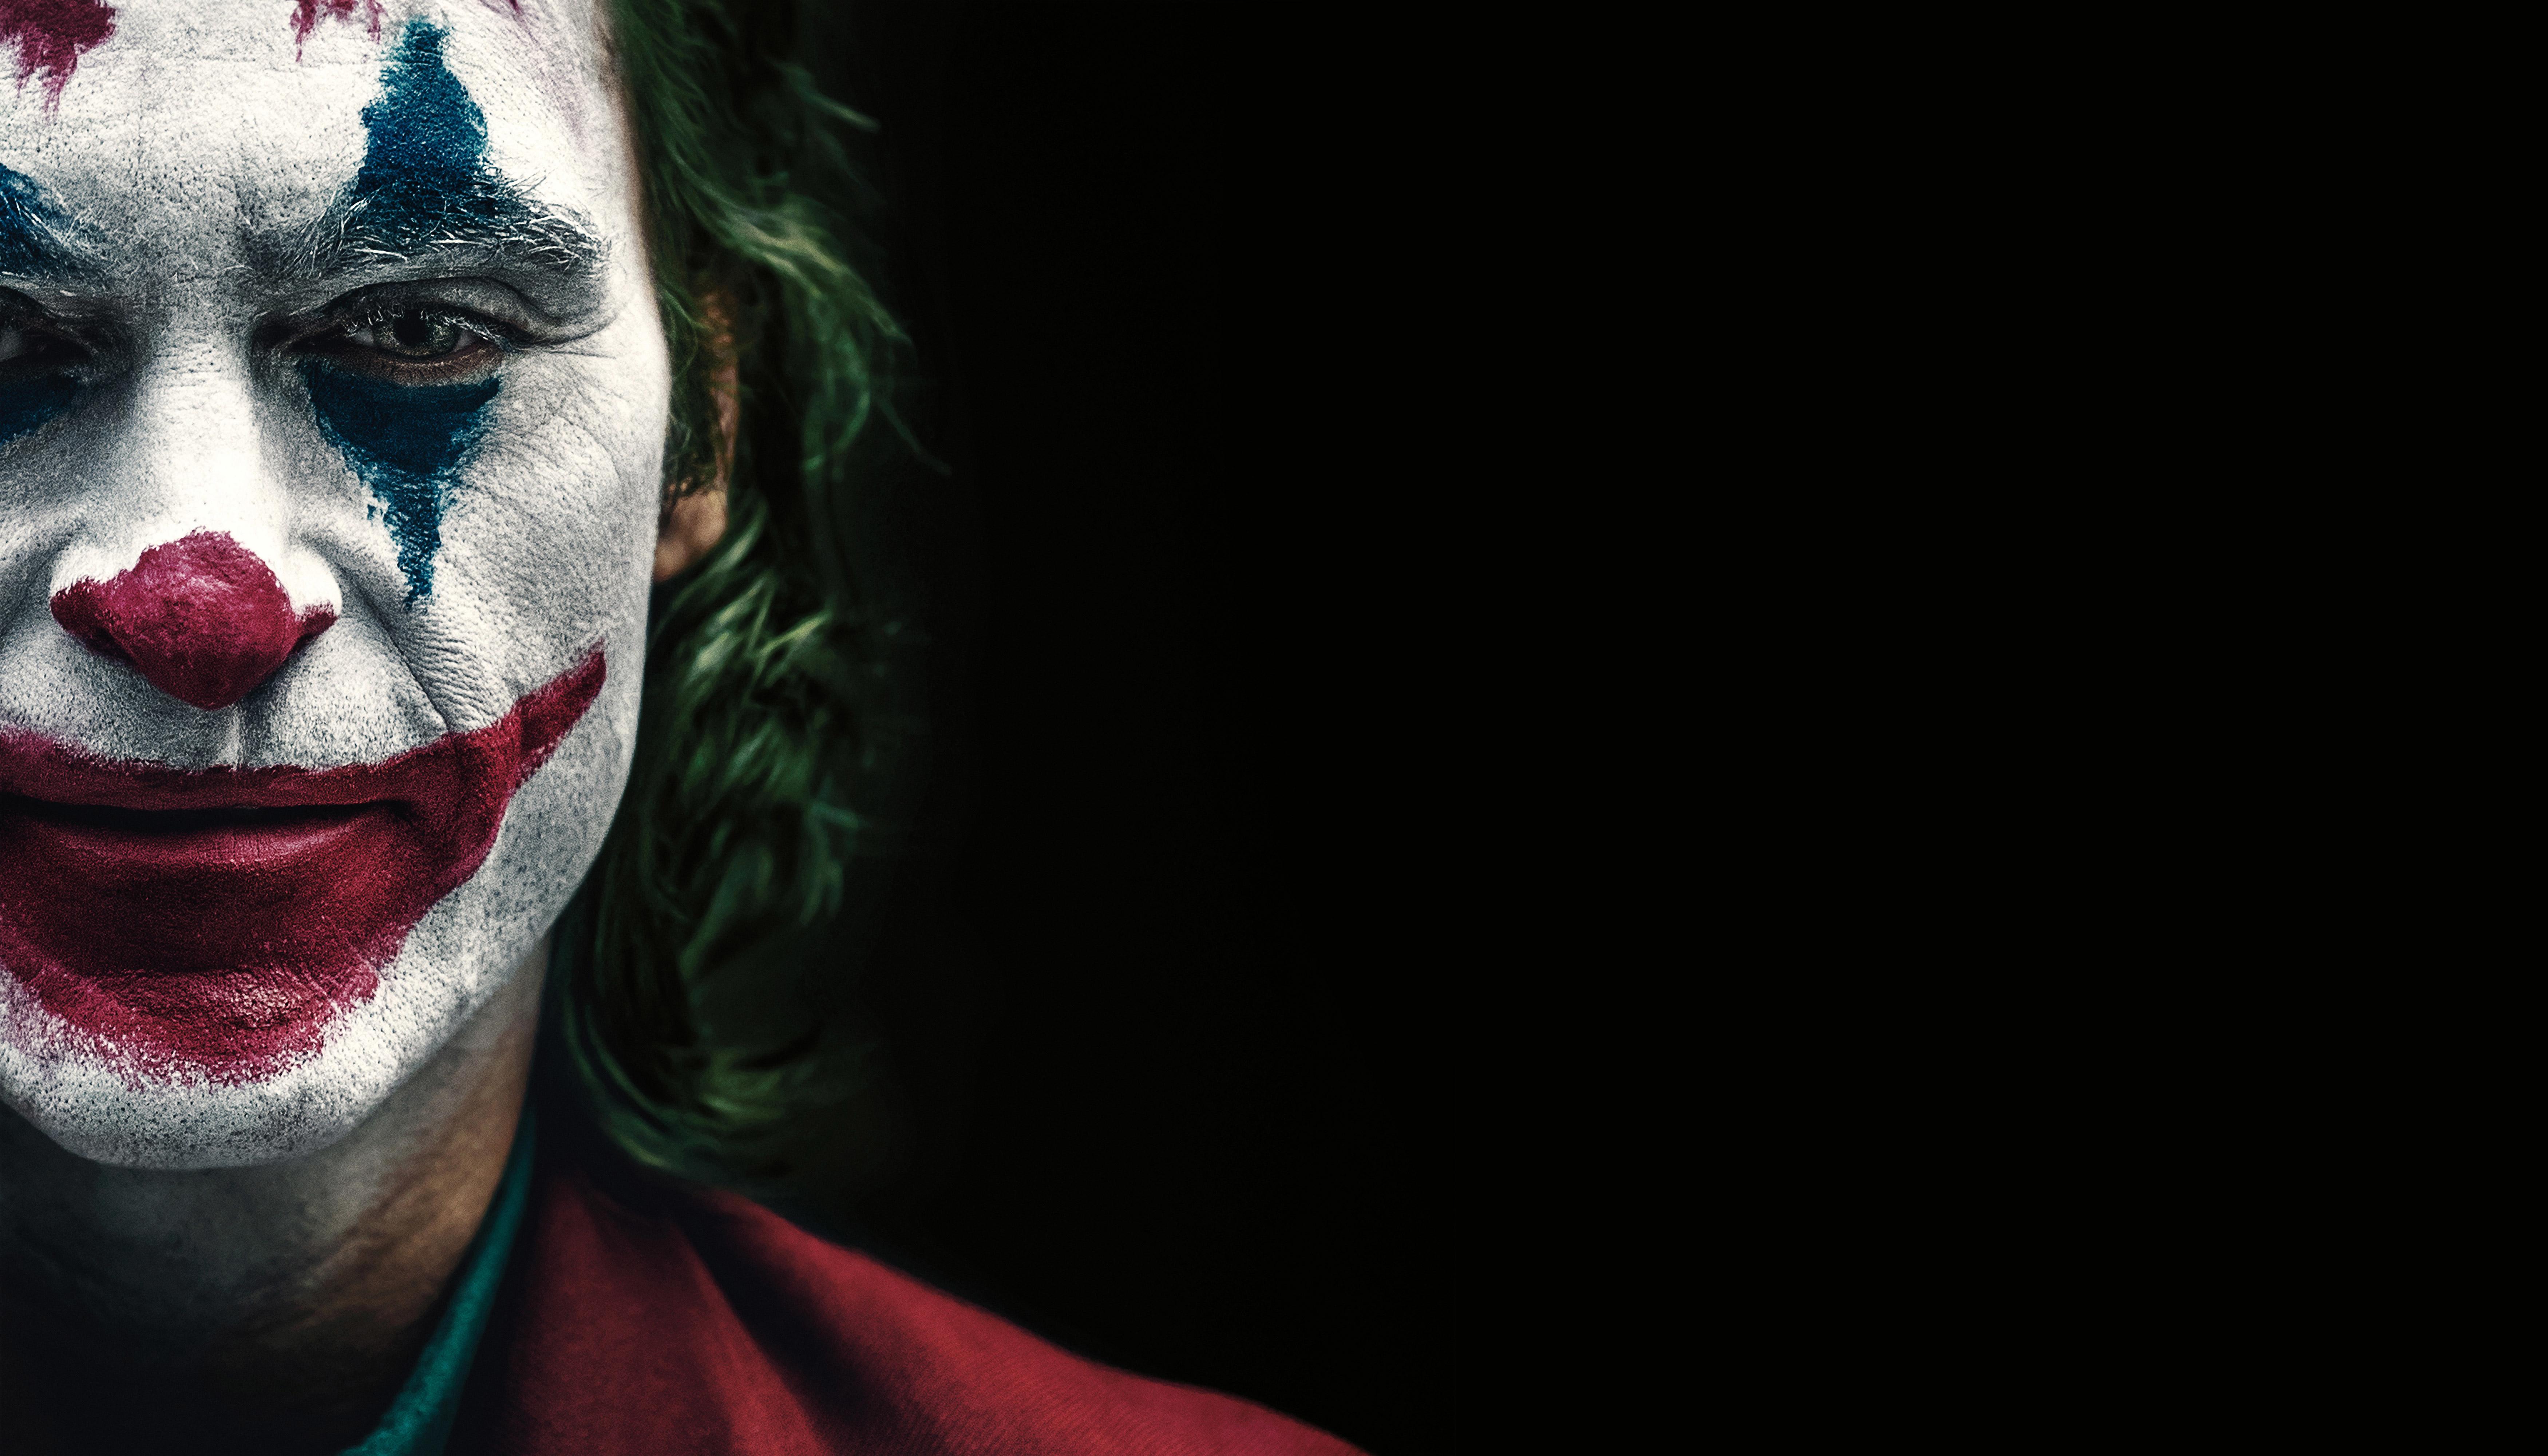 Joker 2019 Movie 8K Wallpaper, HD Movies 4K Wallpapers